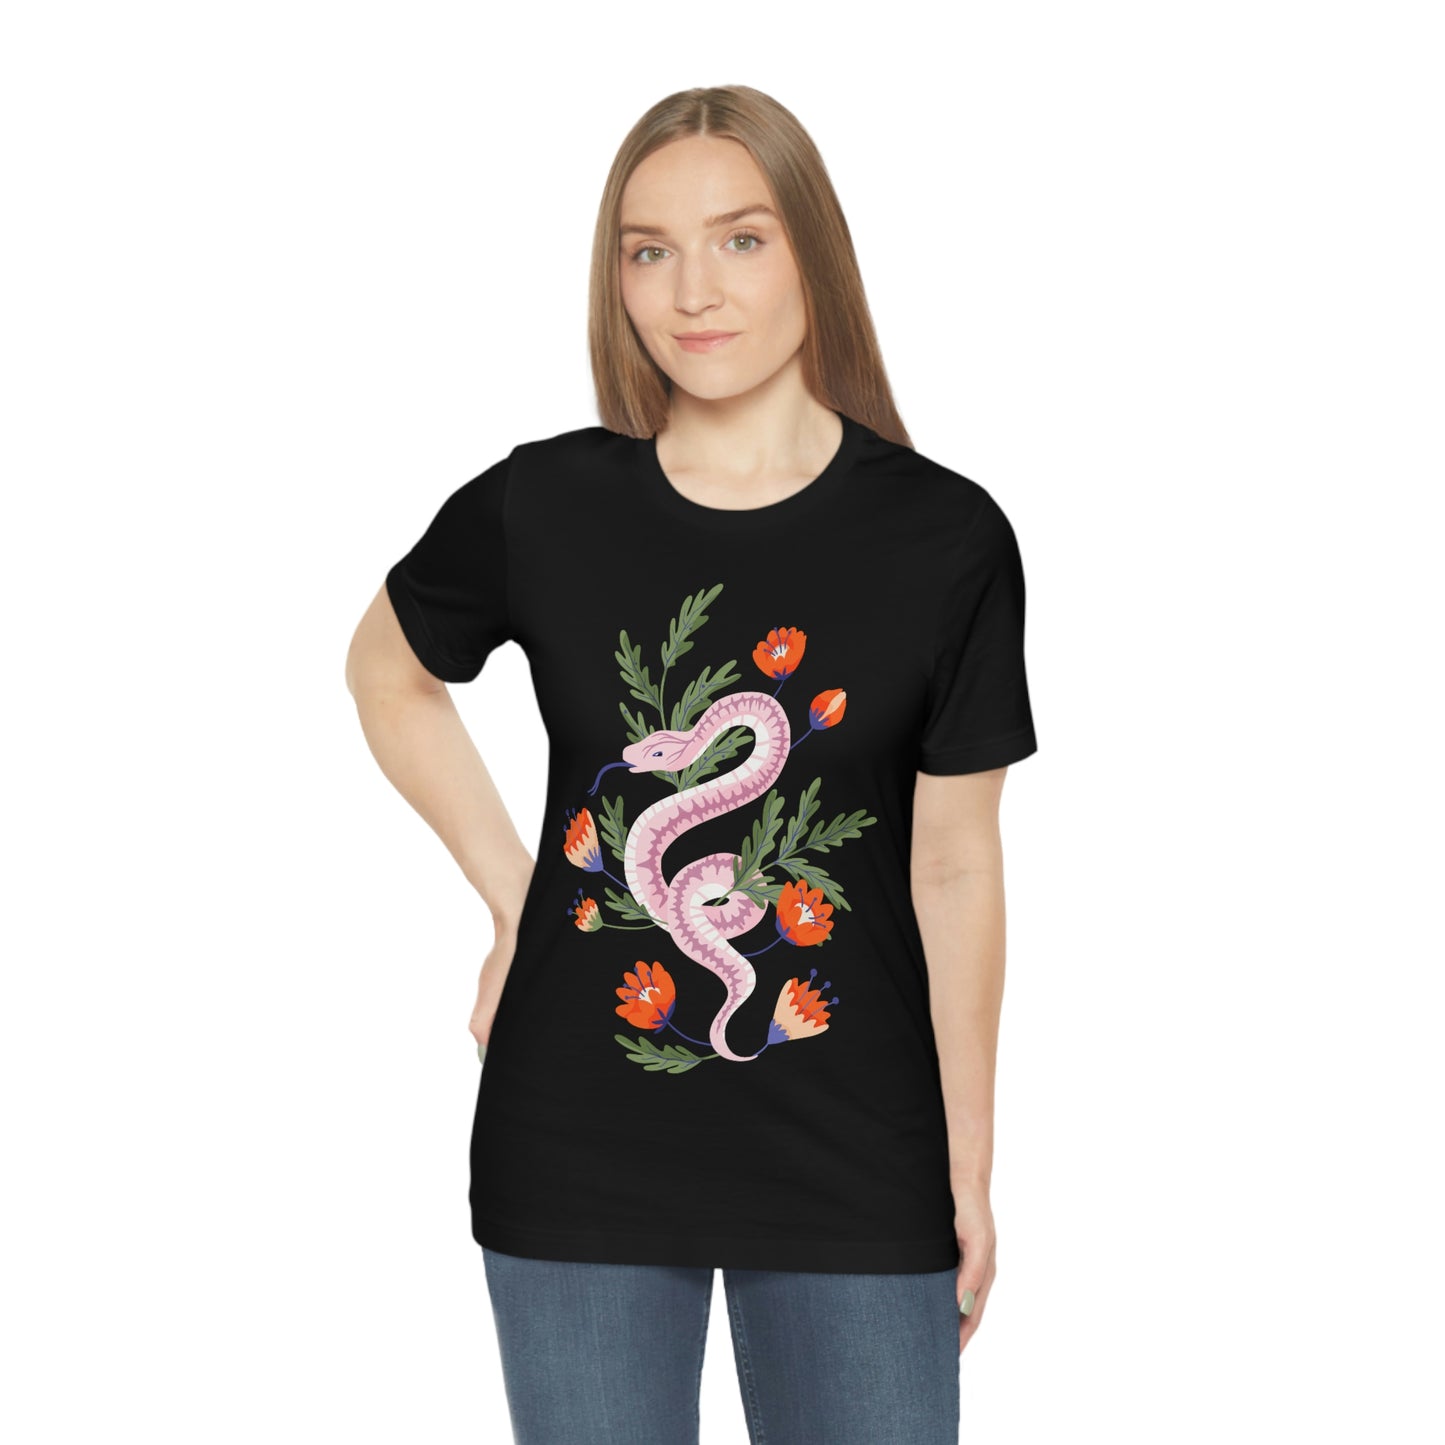 Pink Snake with Red-Orange Flowers Black T-Shirt, Unisex Jersey Short Sleeve Tee